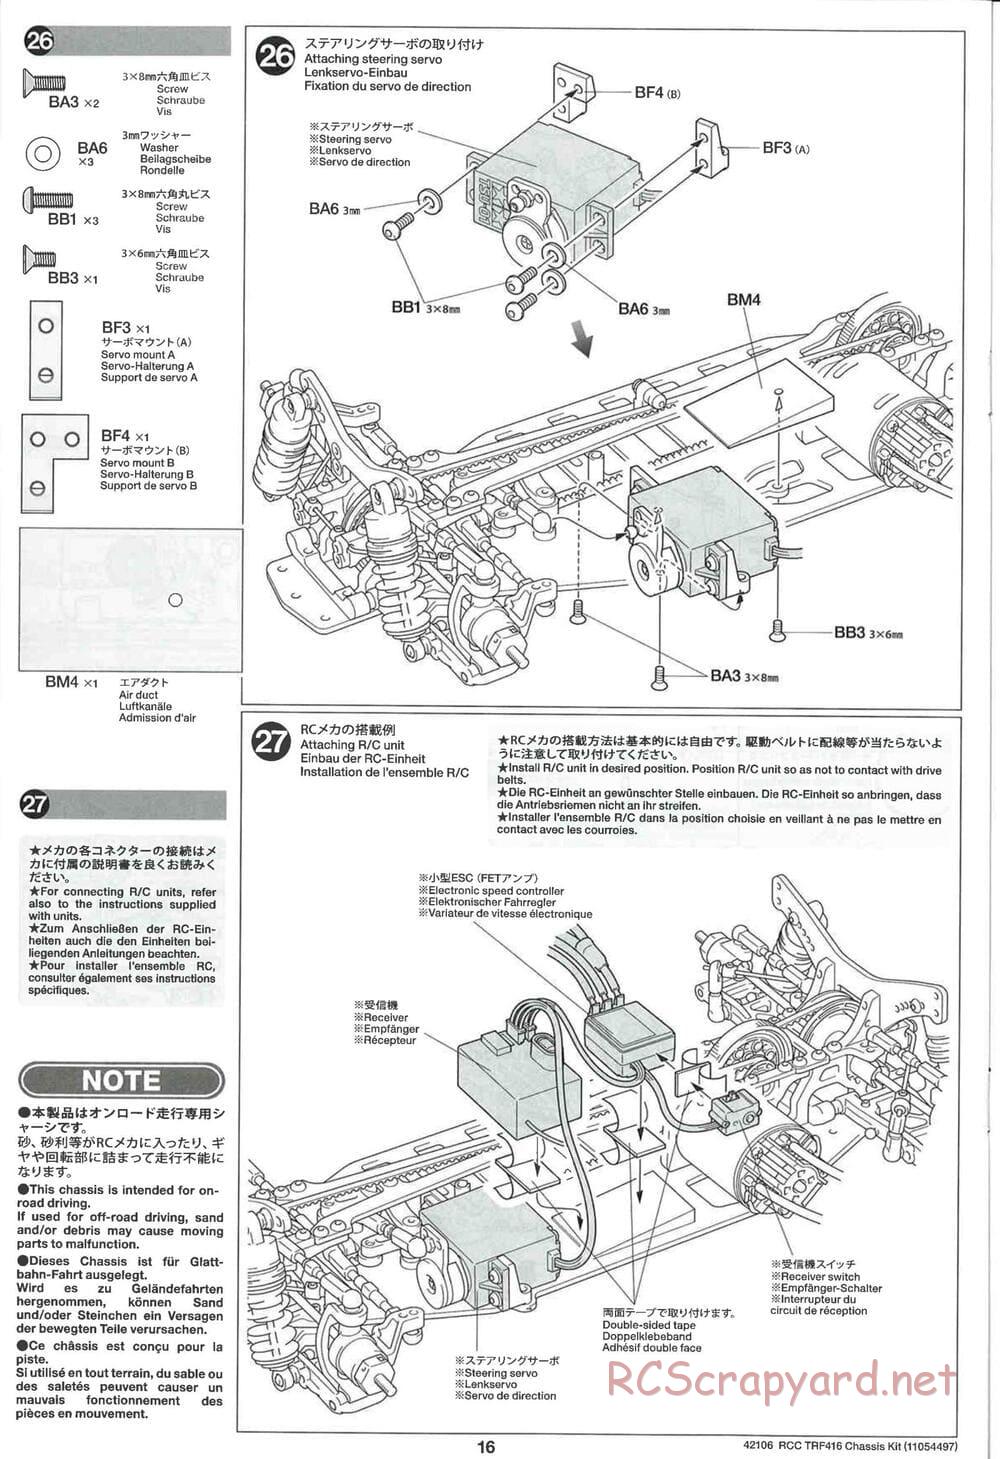 Tamiya - TRF416 Chassis - Manual - Page 16